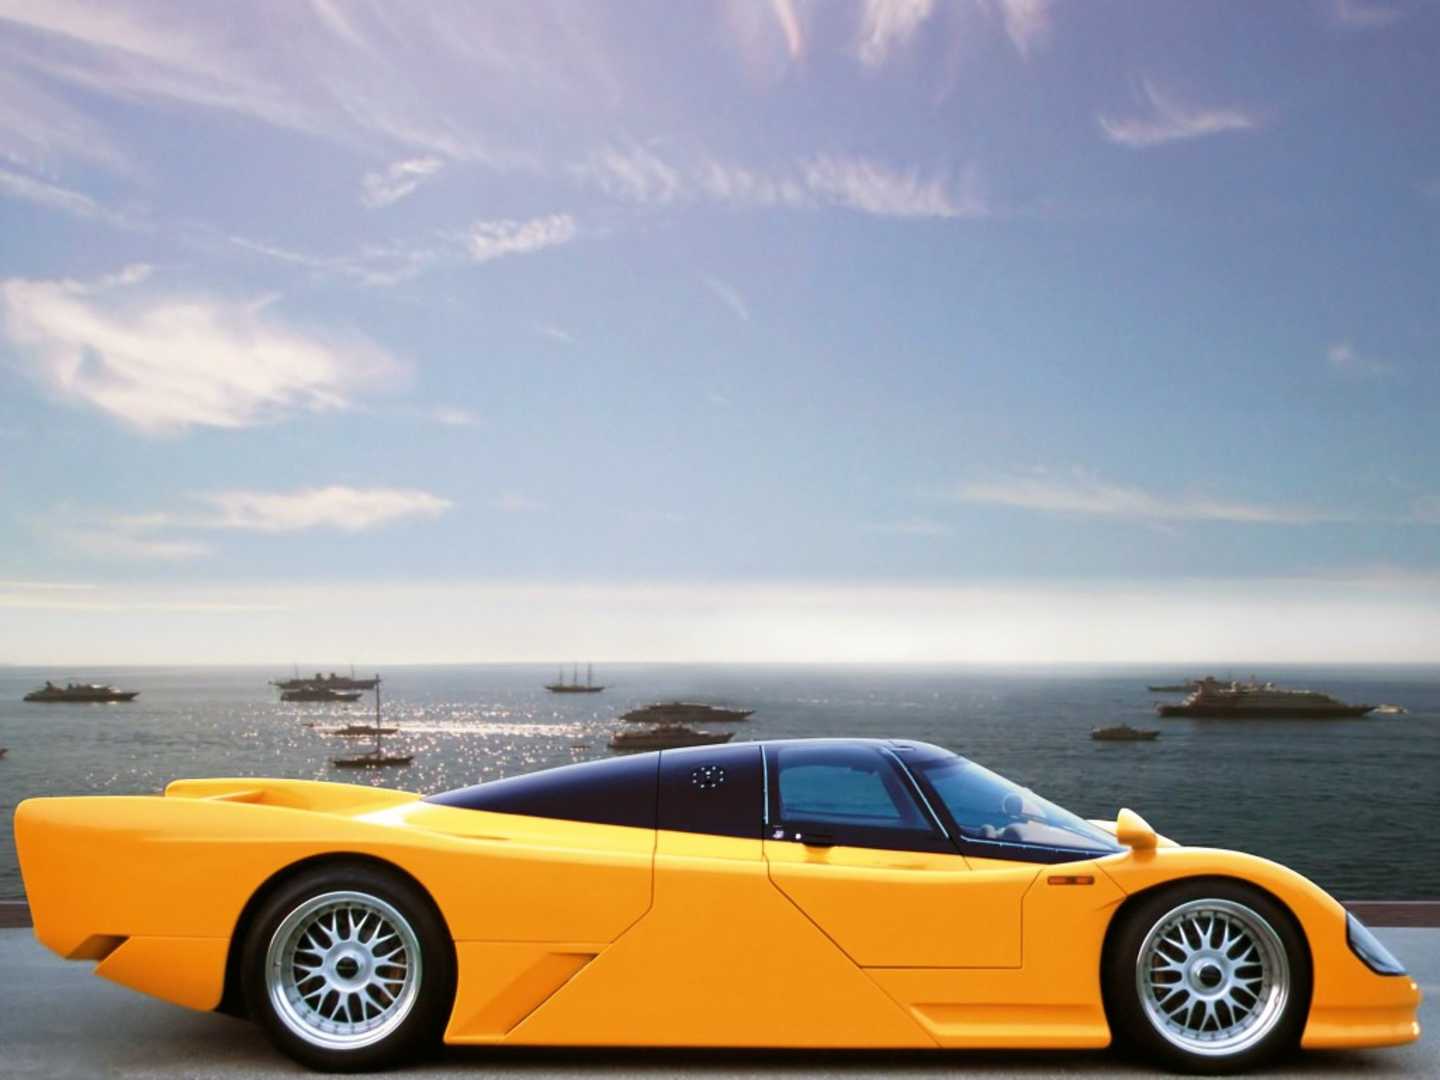 962 Le Mans jaune de profil en bord de mer